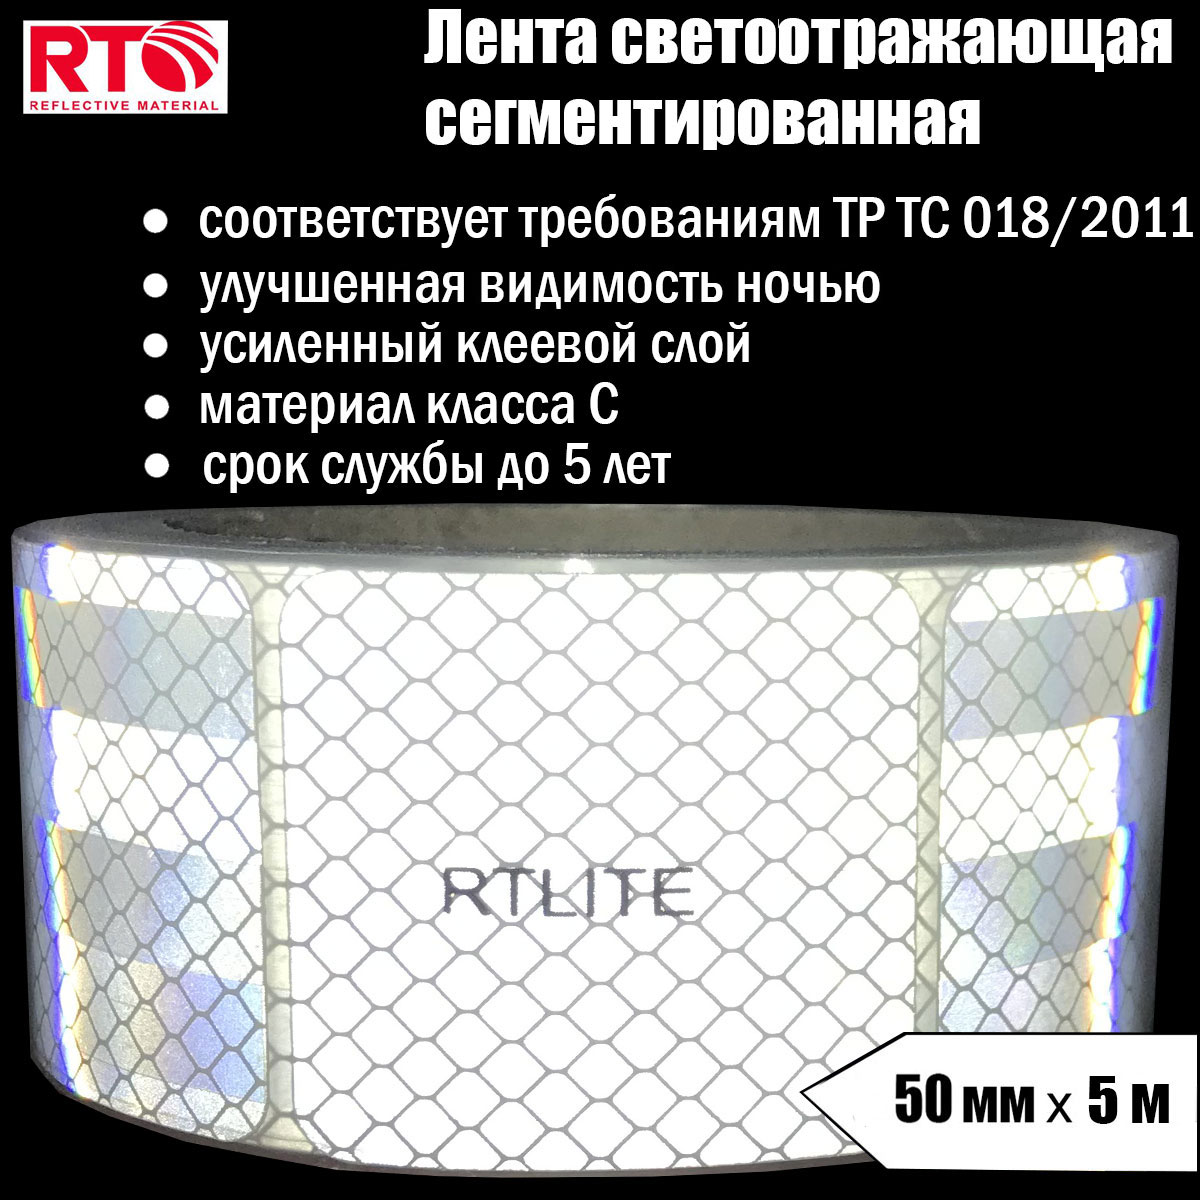 Лента светоотражающая сегментированная RTLITE RT-V104 для контурной маркировки, 50мм х 5м лента светоотражающая для контурной маркировки rtlite rt v104 50 8 мм х 5 м желтая